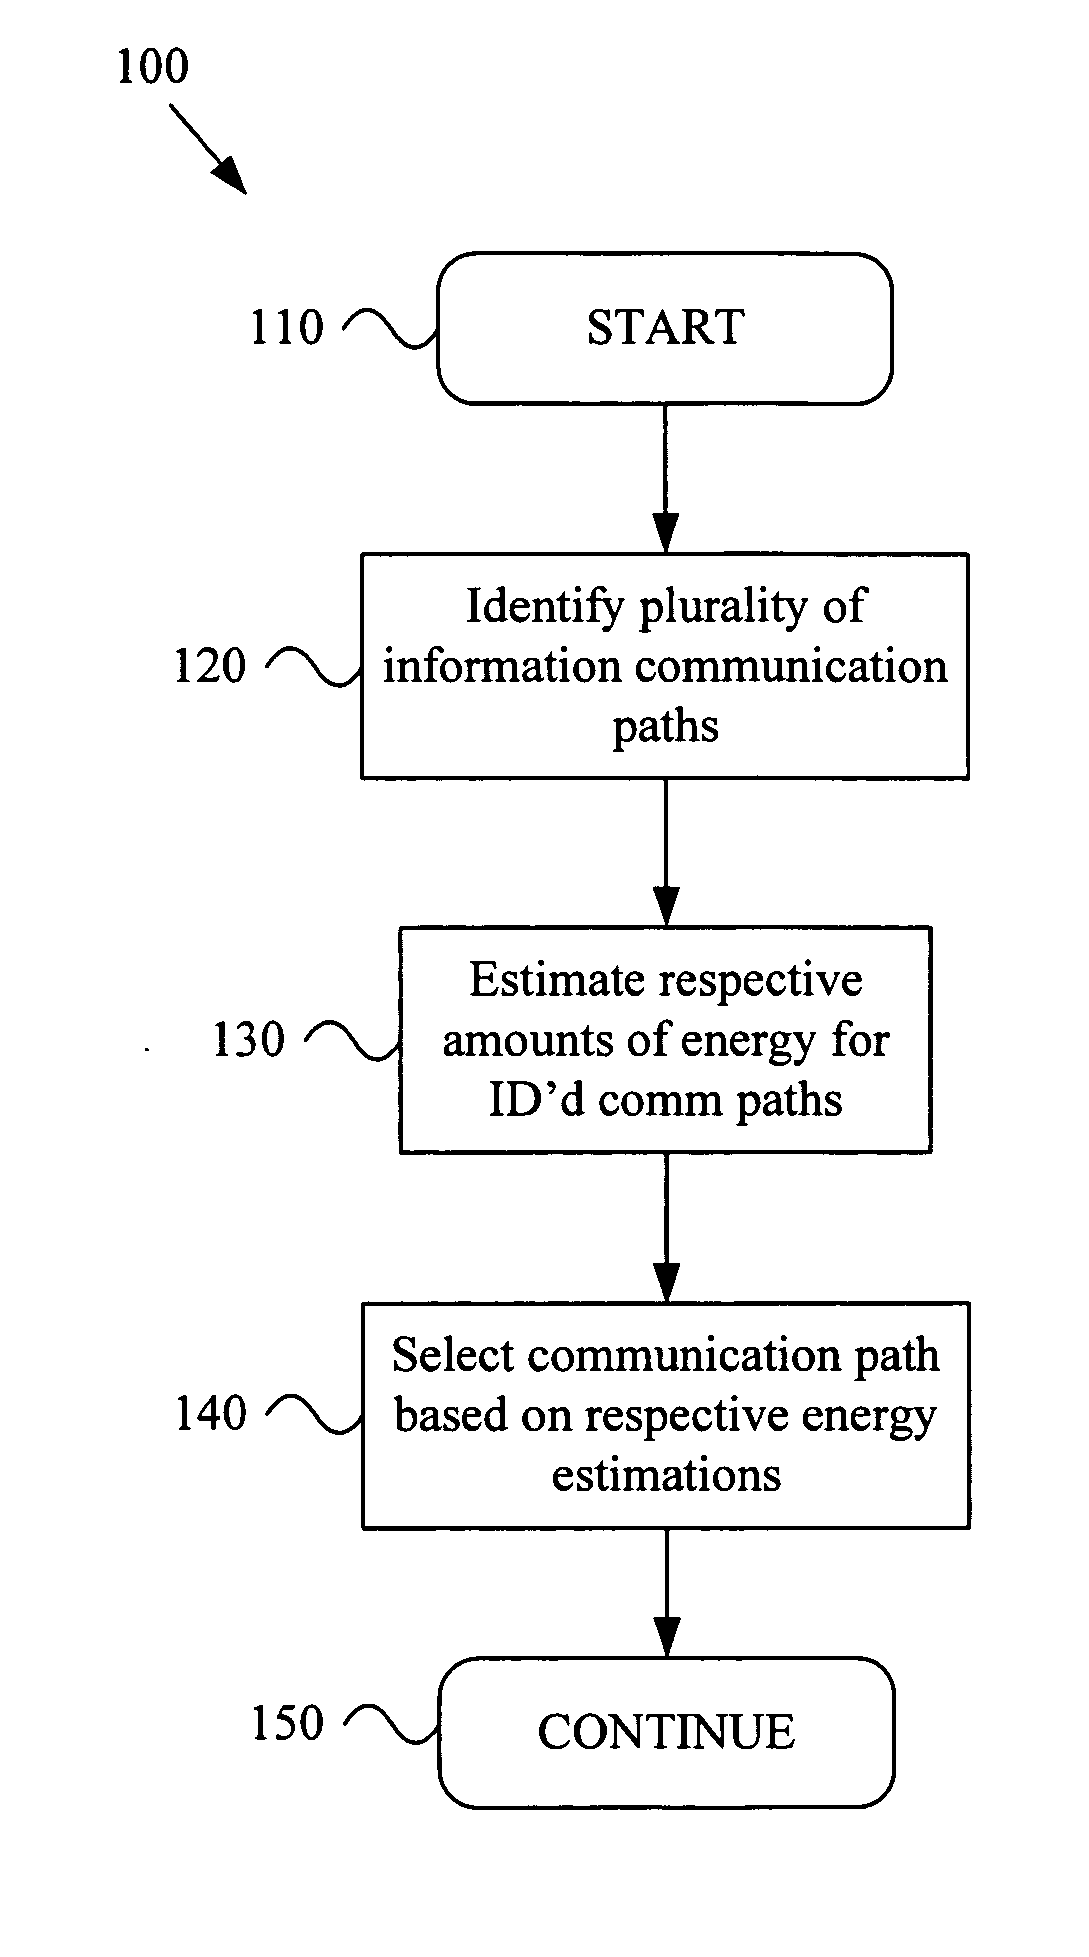 Energy based communication path selection